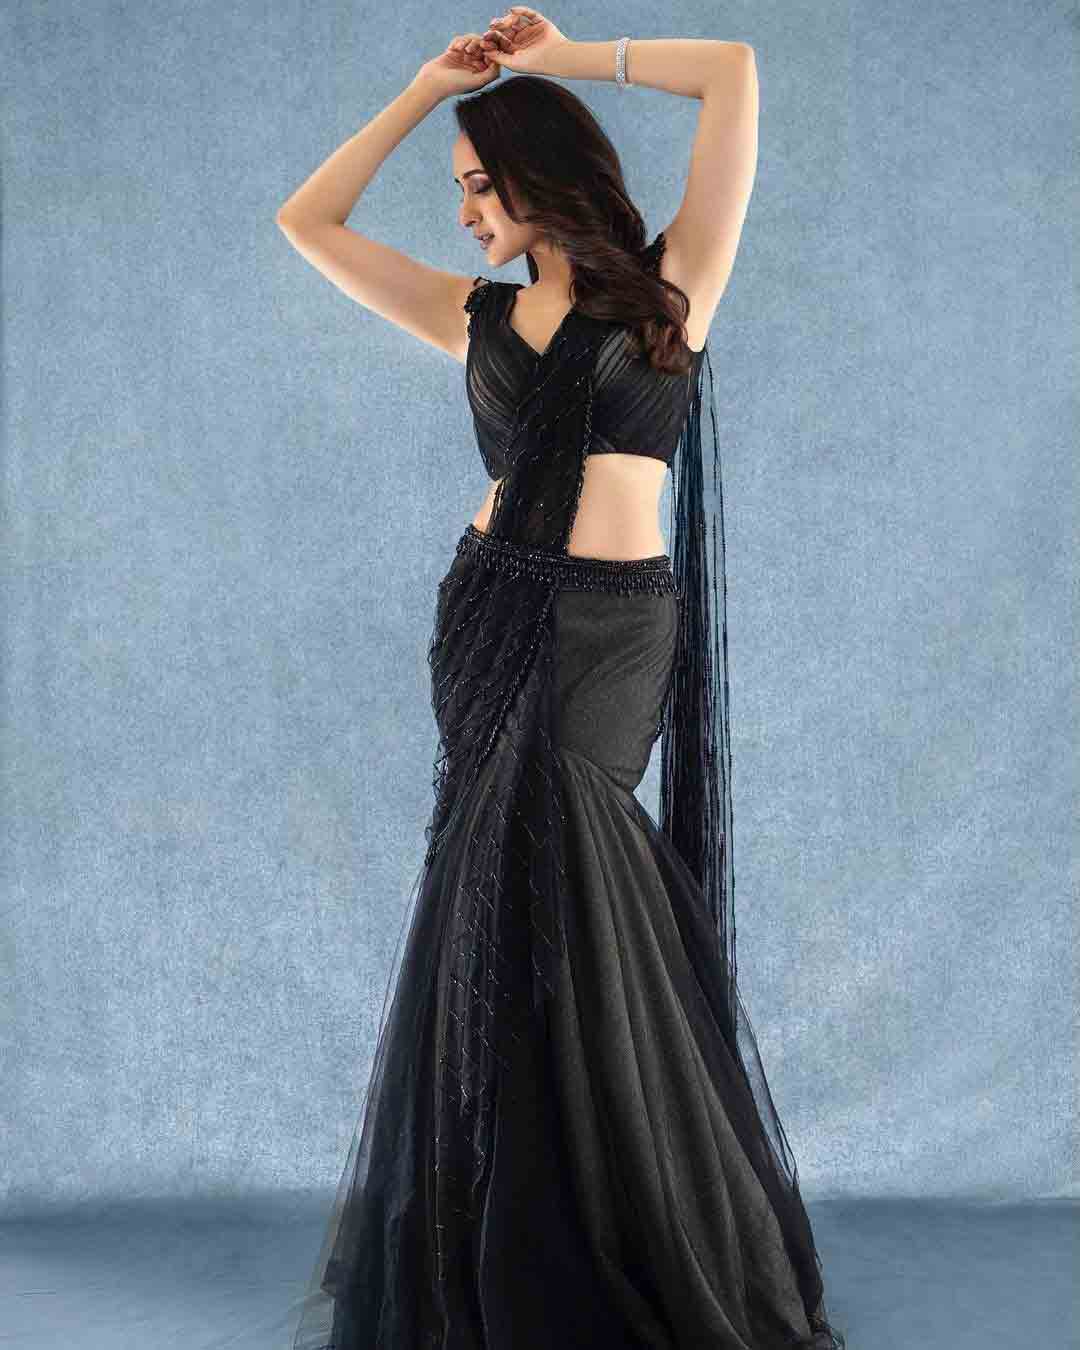 Pragya Jaiswal looks stunning in a black saree.